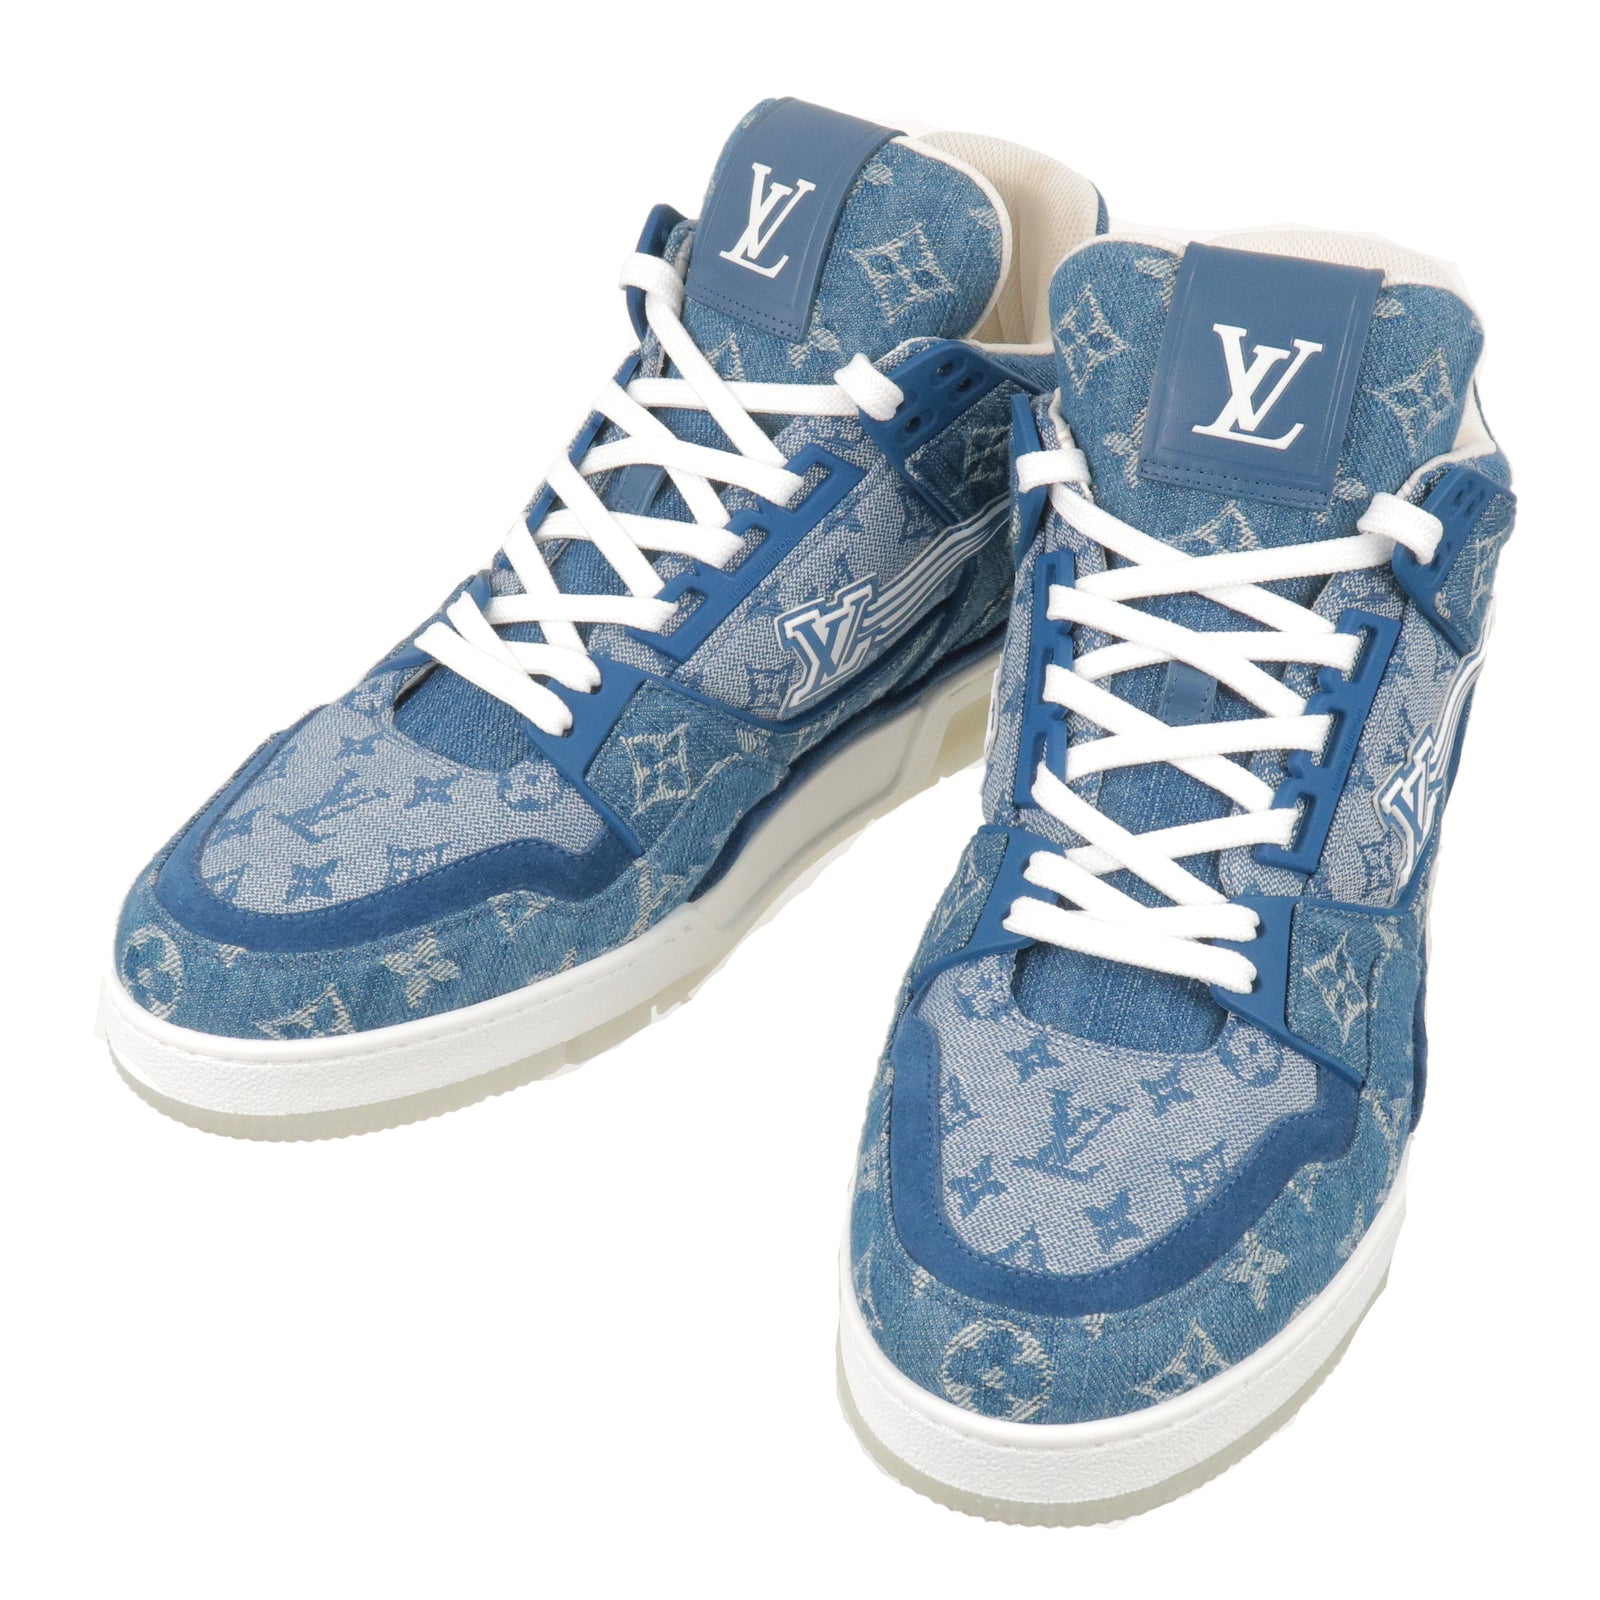 Louis-Vuitton-Denim-LV-Trainer-Hi-Cut-Sneakers-US8.5-Indigo-1A8MG1